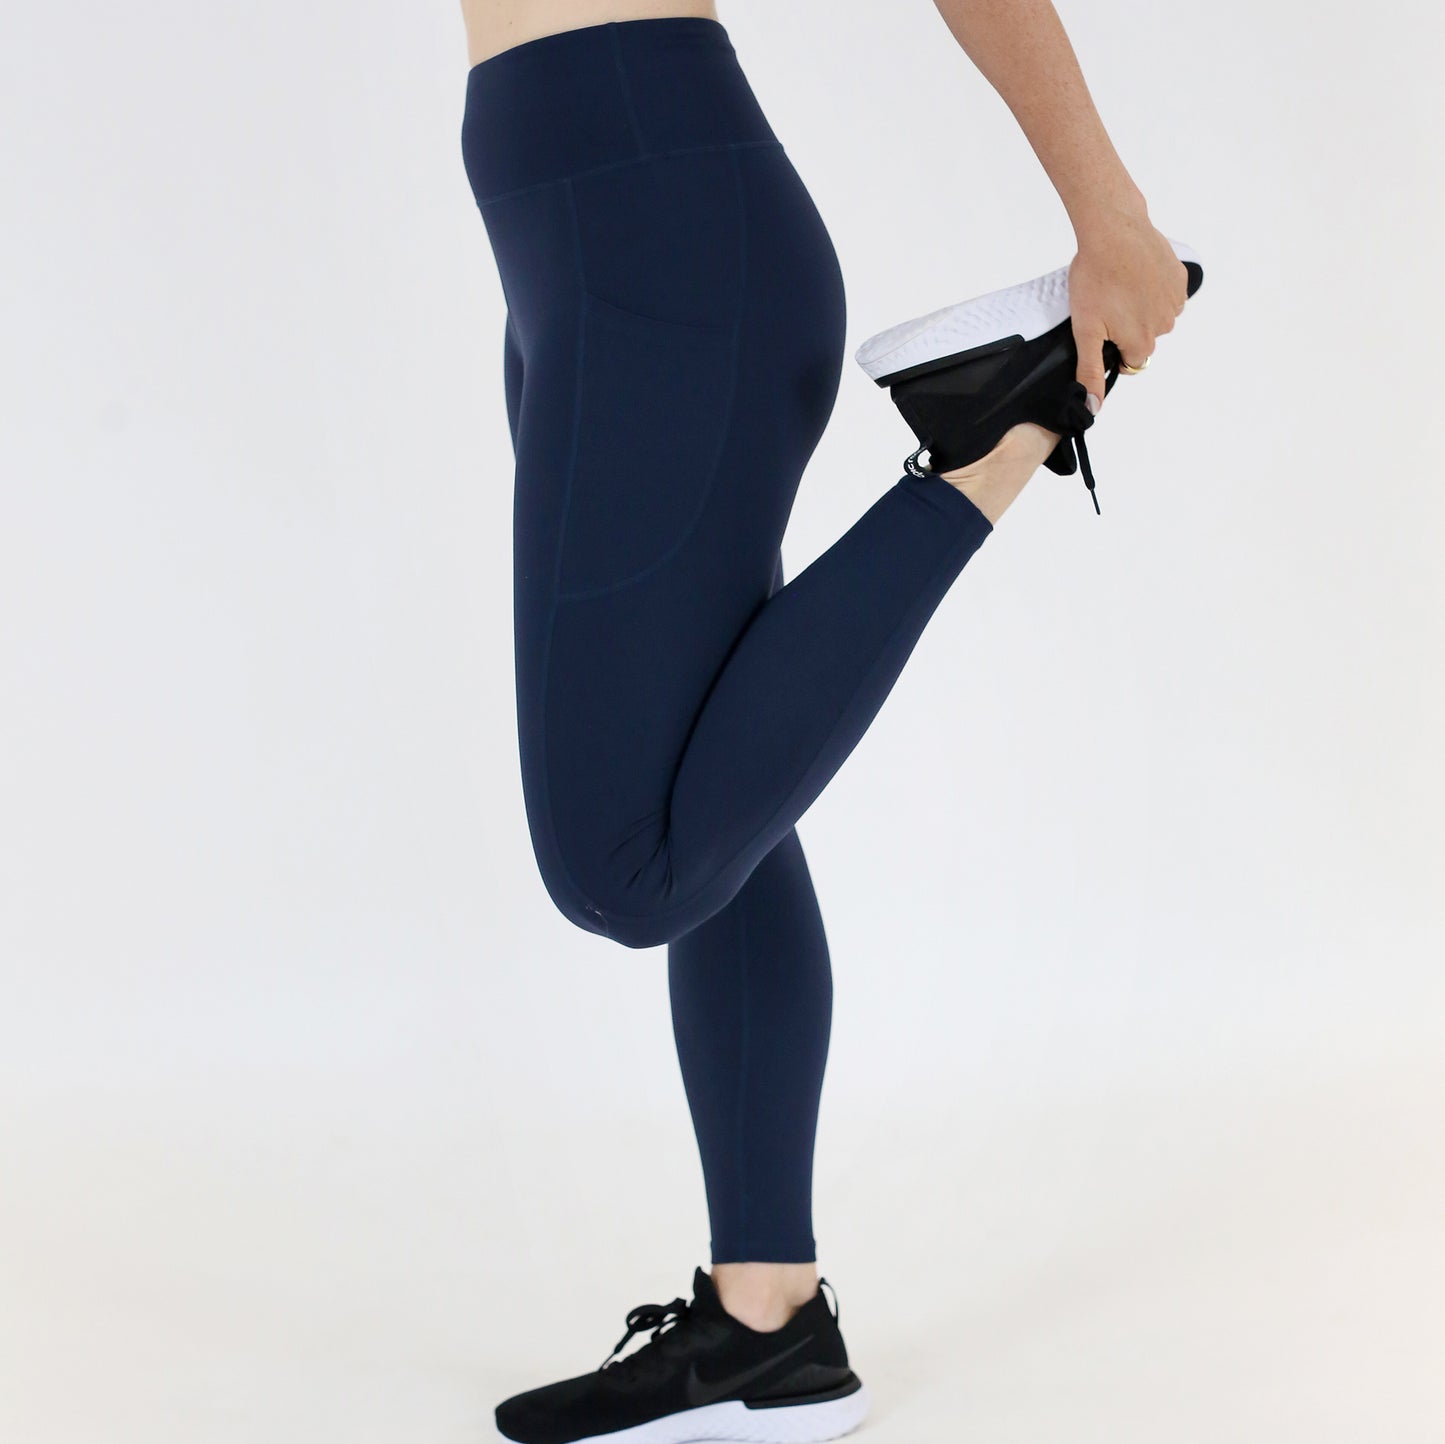 Sheebo Womens Full Length Cotton Leggings with Pockets, Navy, XL 